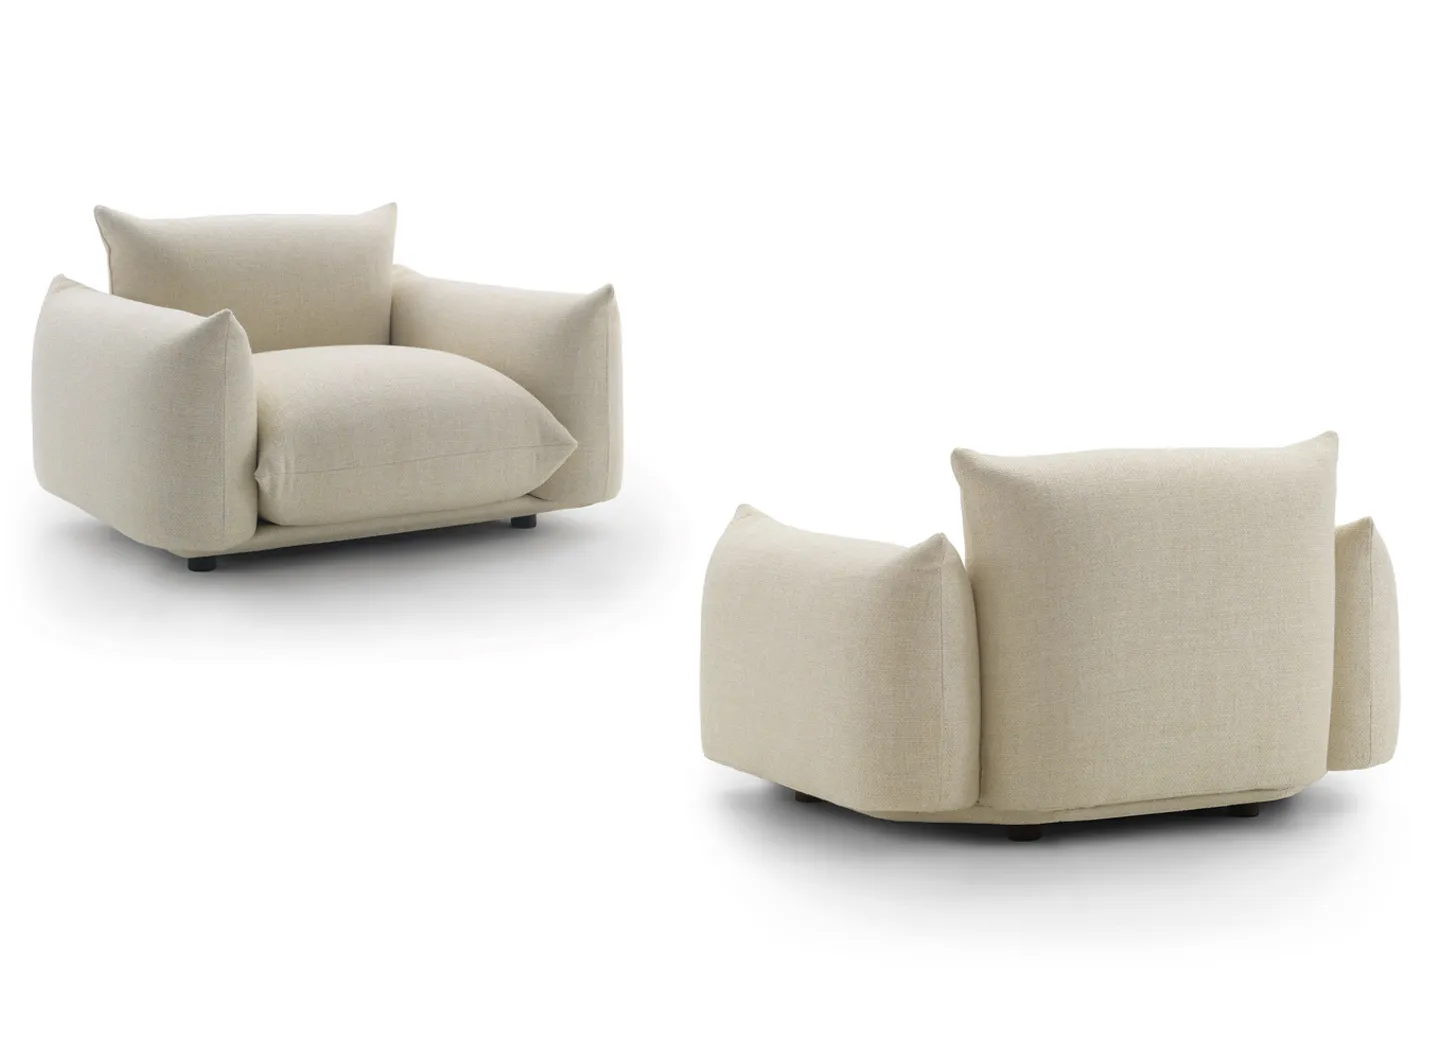 Marenco armchair - Fabric version